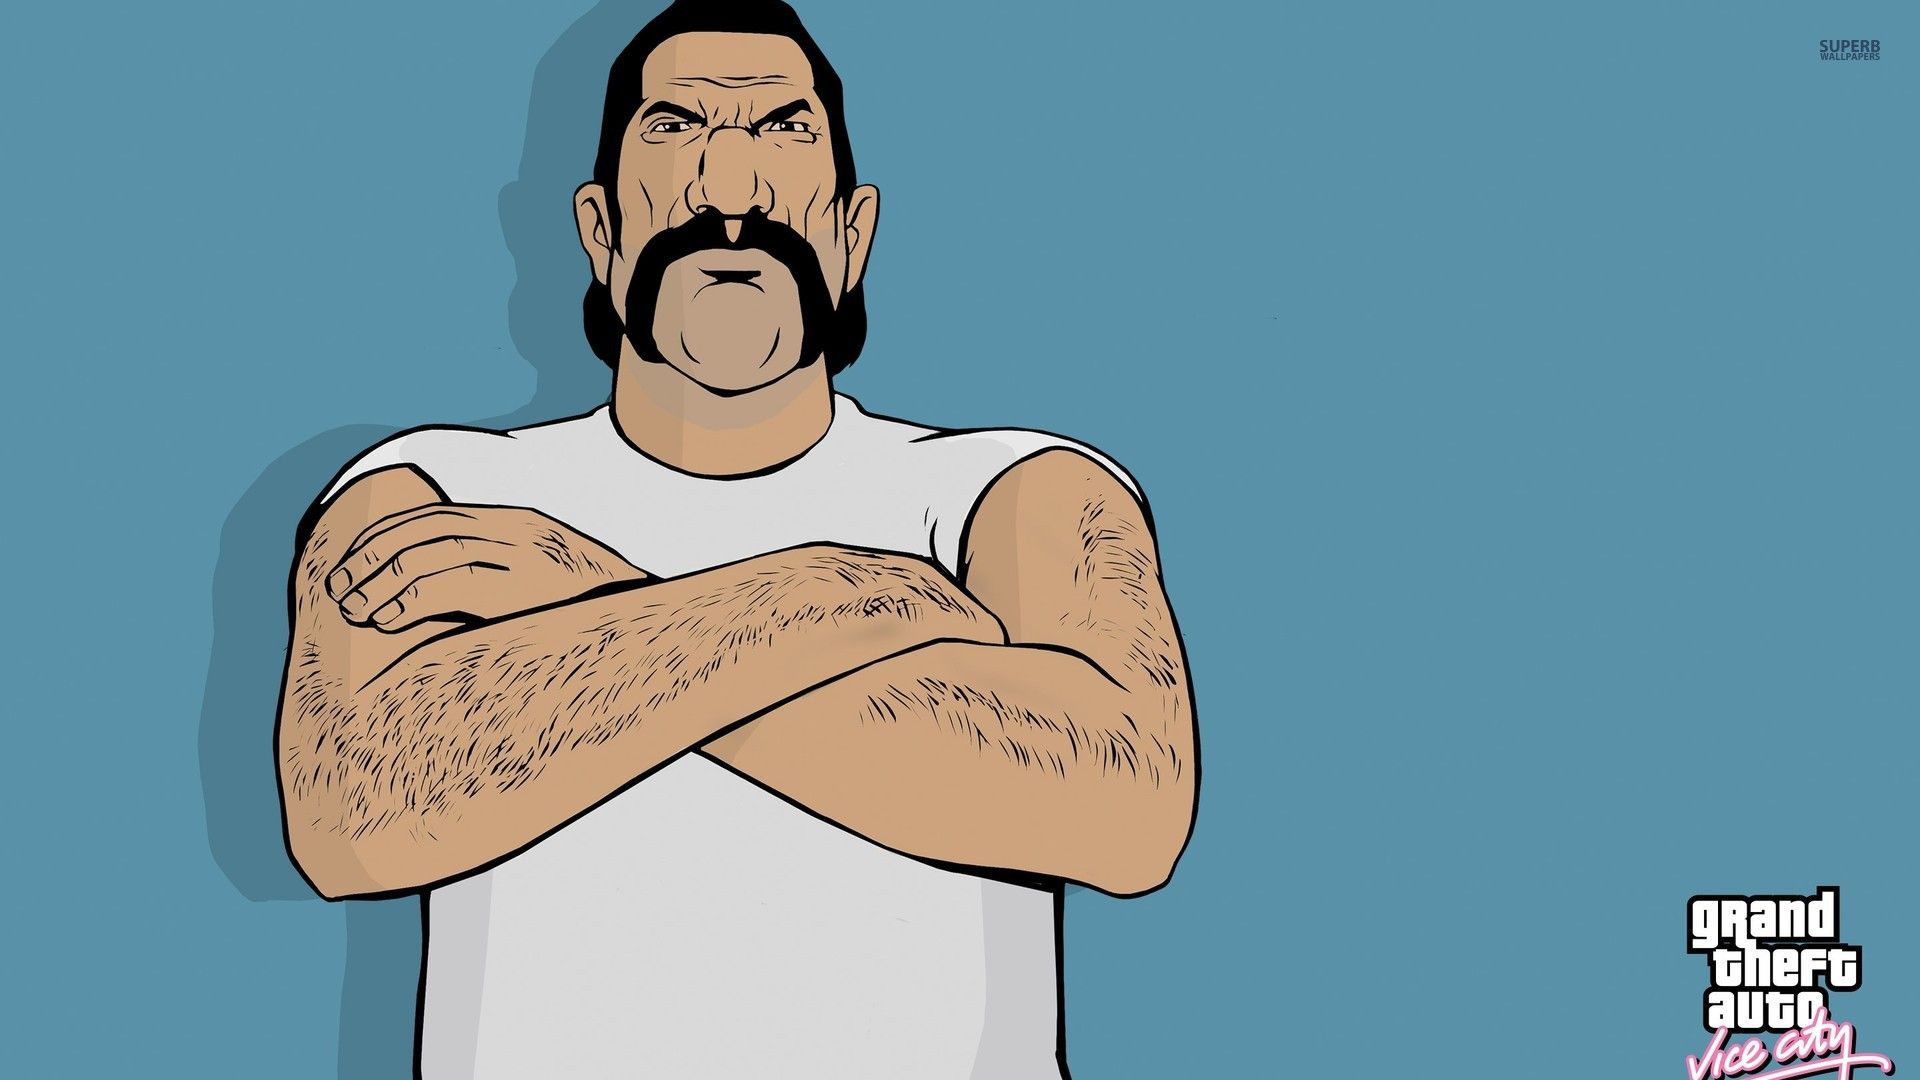 Angry Umberto Robina from GTA: Vice City wallpaper - Game ...